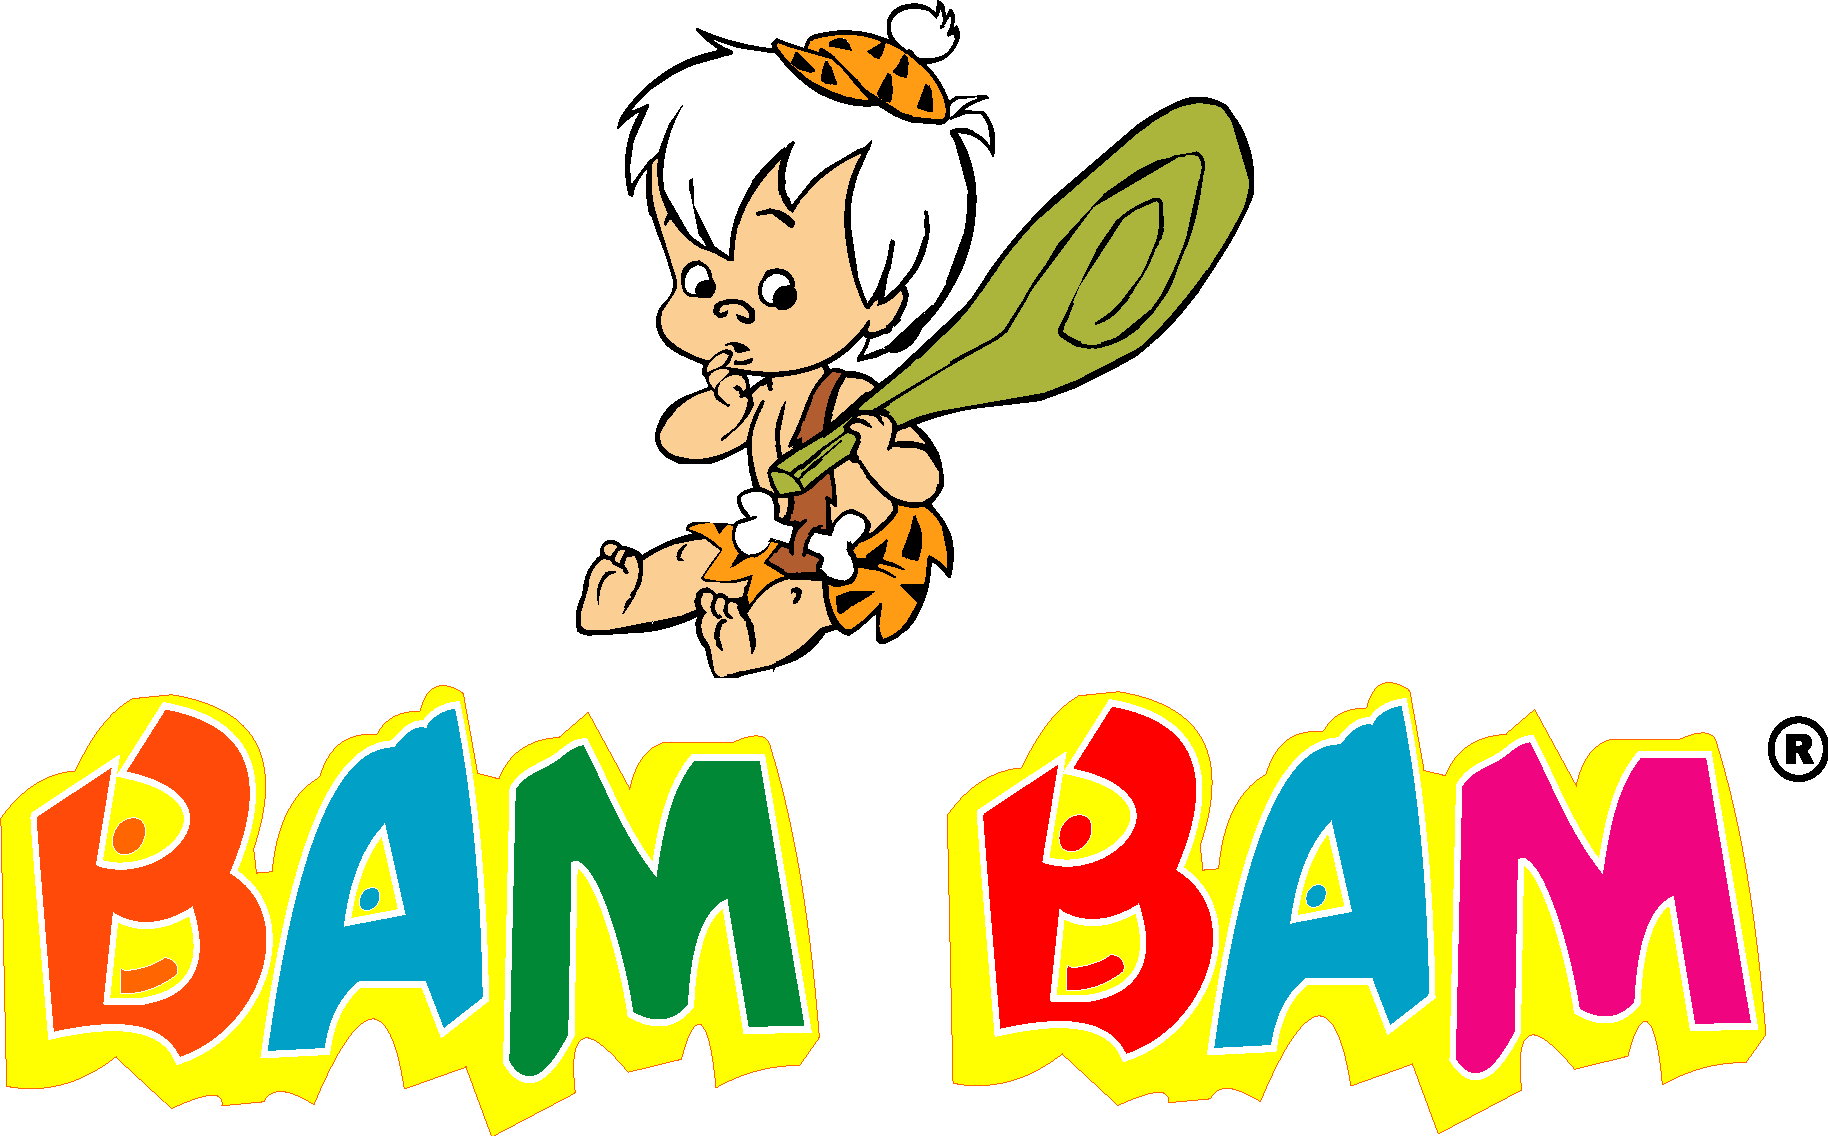 Carla bam bam. БАМ БАМ логотип. Bam Bam logo. Bam Bam Bam Бэмби. Bam Bam вторая часть.